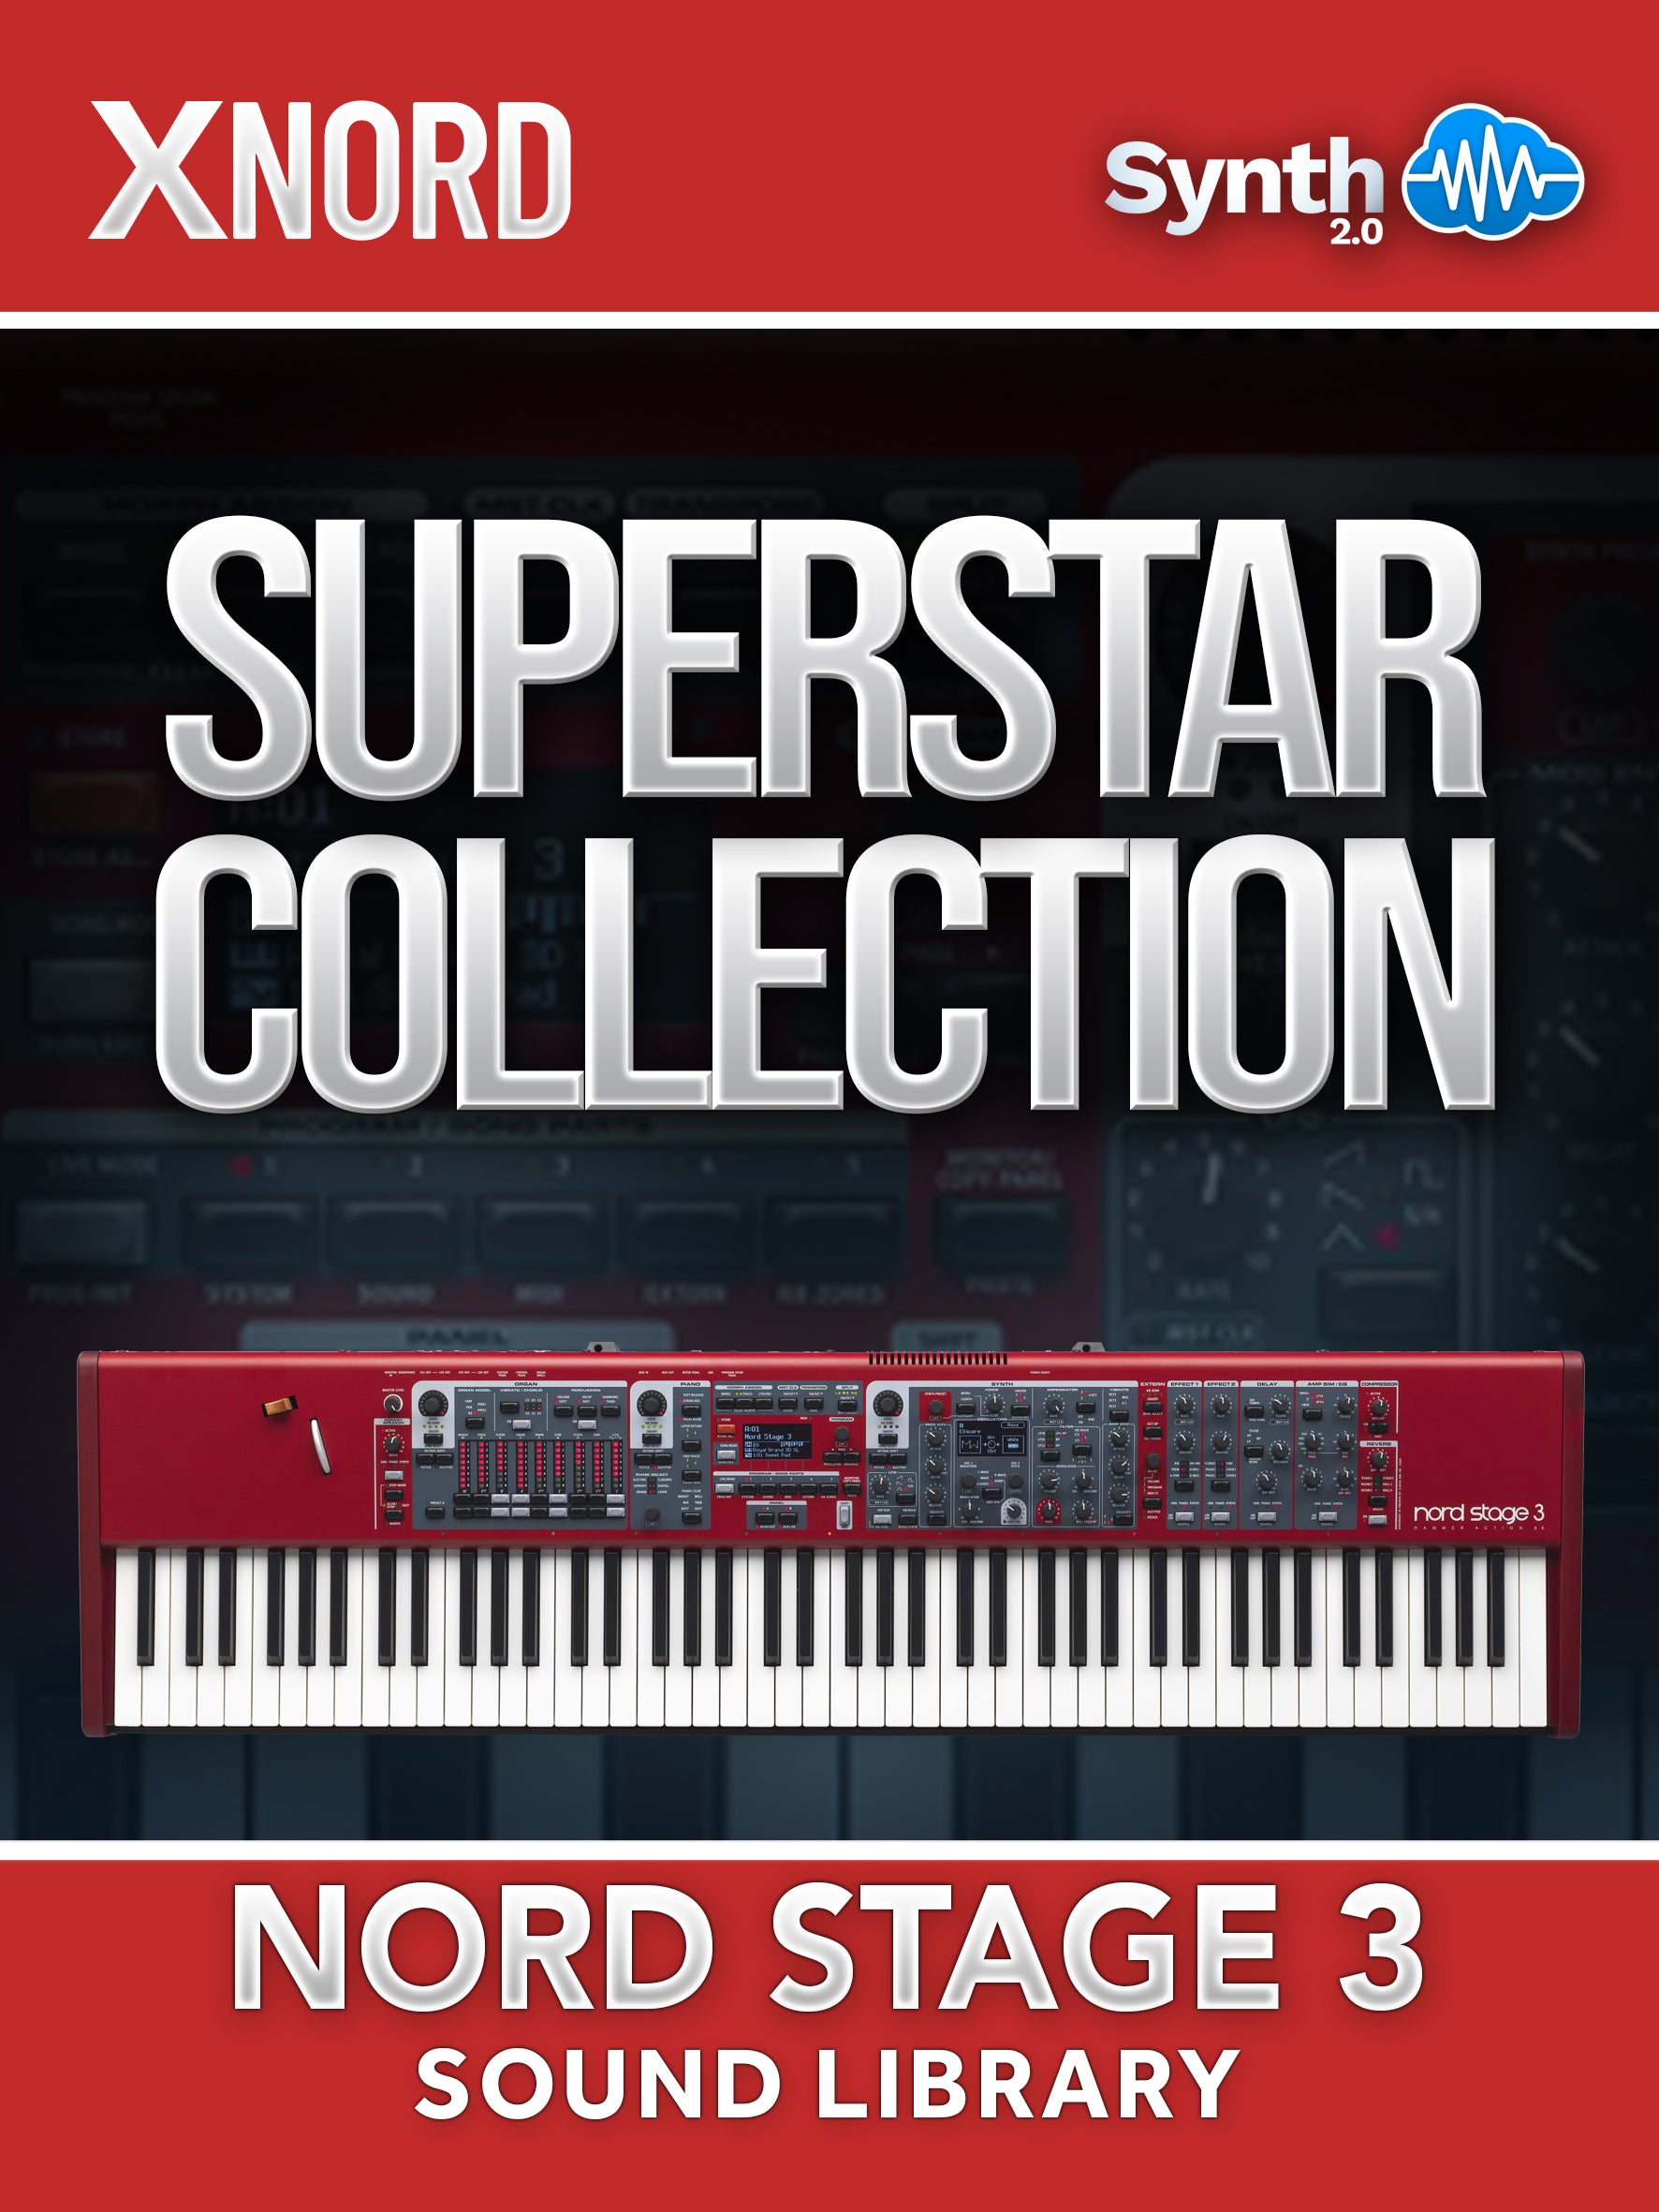 ASL012 - SuperStar Collection - Nord Stage 3 ( 17 presets )